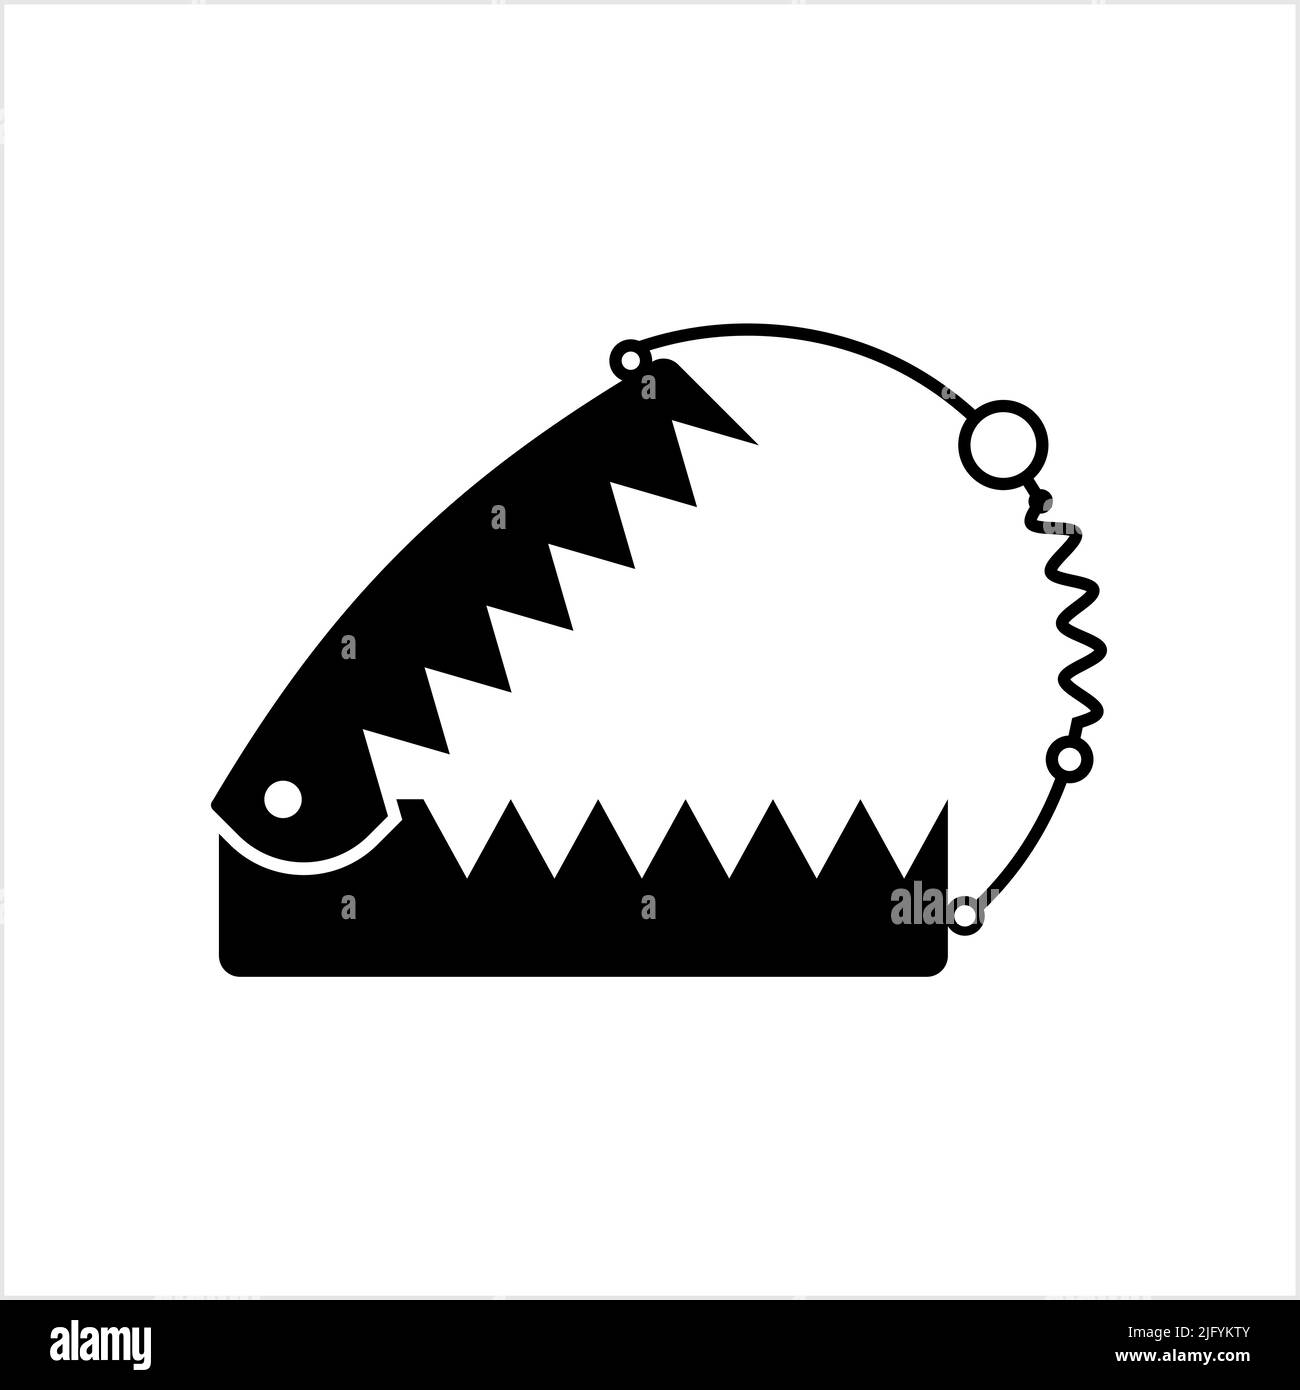 https://c8.alamy.com/comp/2JFYKTY/animal-trap-icon-animal-catching-trap-vector-art-illustration-2JFYKTY.jpg